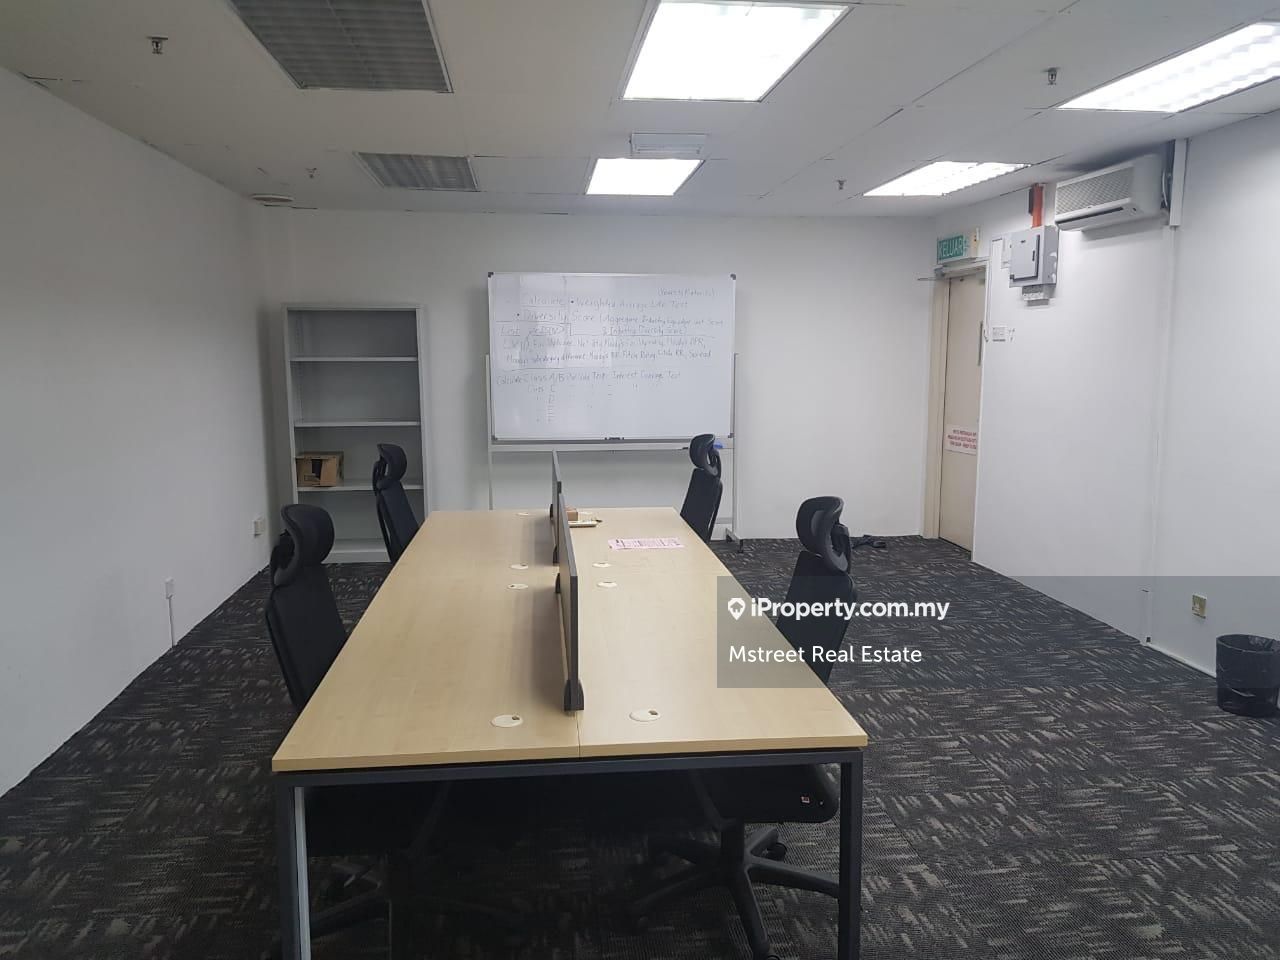 Leisure Commercial Square Petaling Jaya Bandar Sunway Shop Office For Rent Iproperty Com My